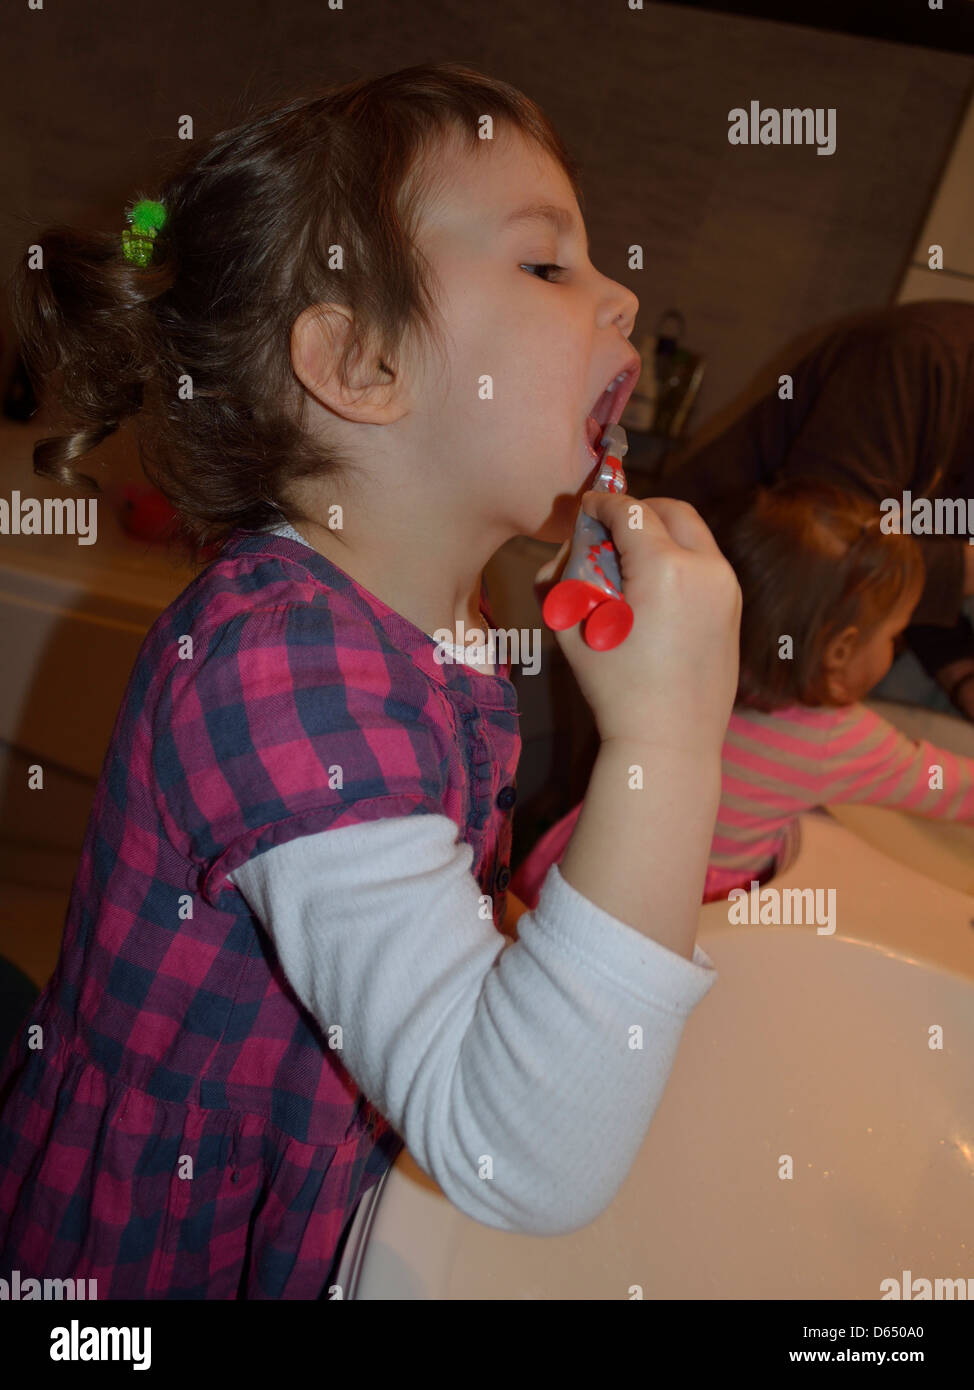 Little girl brushing teeth at sink Stock Photo